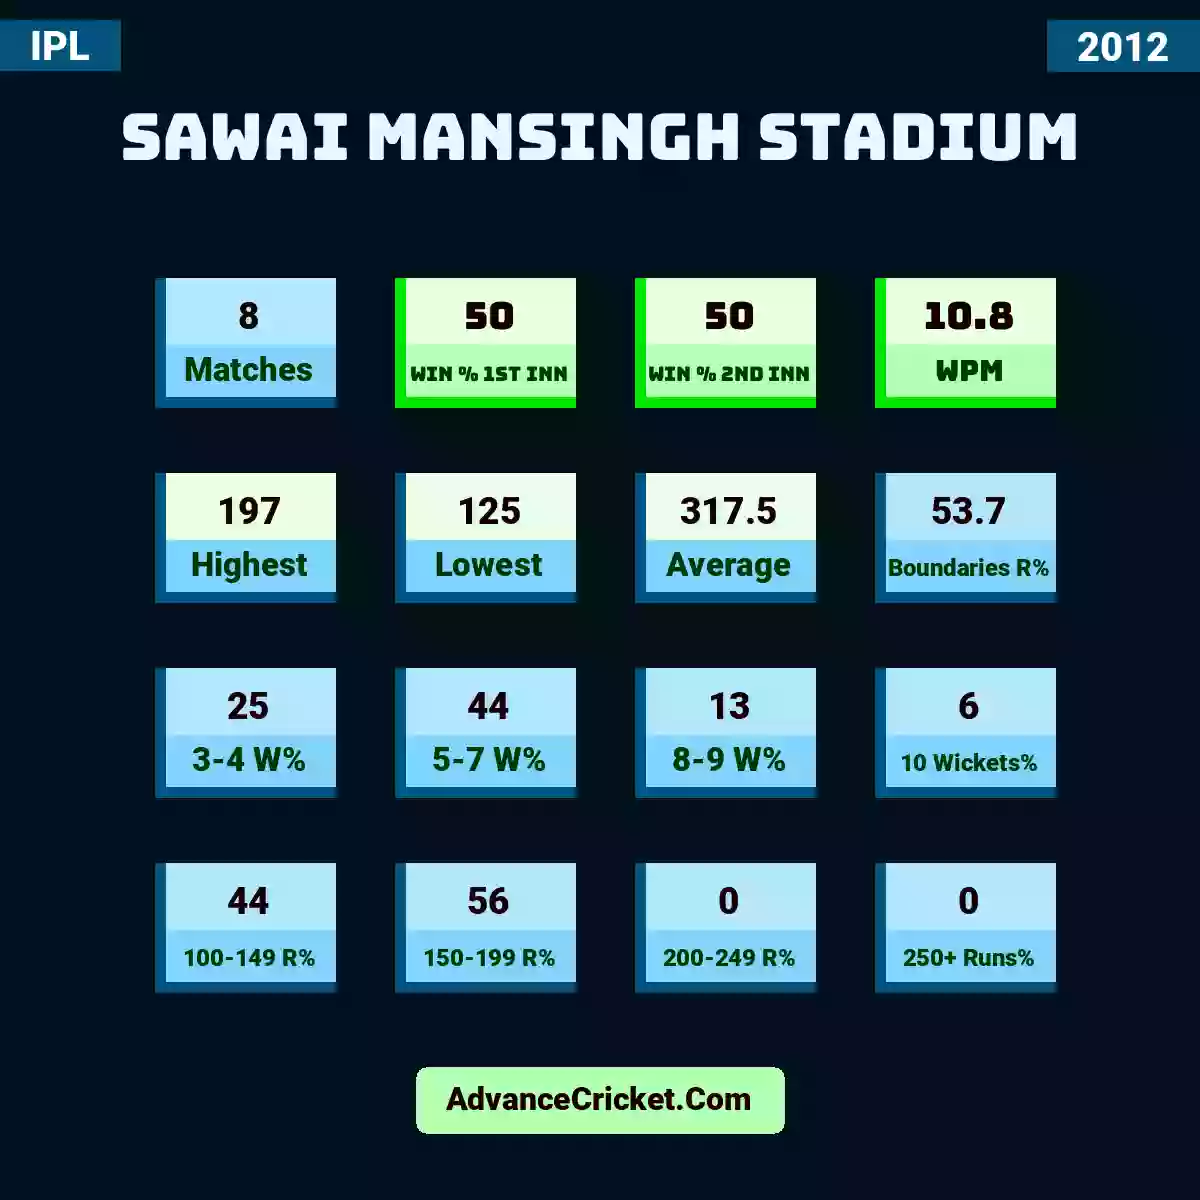 Image showing Sawai Mansingh Stadium with Matches: 8, Win % 1st Inn: 50, Win % 2nd Inn: 50, WPM: 10.8, Highest: 197, Lowest: 125, Average: 317.5, Boundaries R%: 53.7, 3-4 W%: 25, 5-7 W%: 44, 8-9 W%: 13, 10 Wickets%: 6, 100-149 R%: 44, 150-199 R%: 56, 200-249 R%: 0, 250+ Runs%: 0.